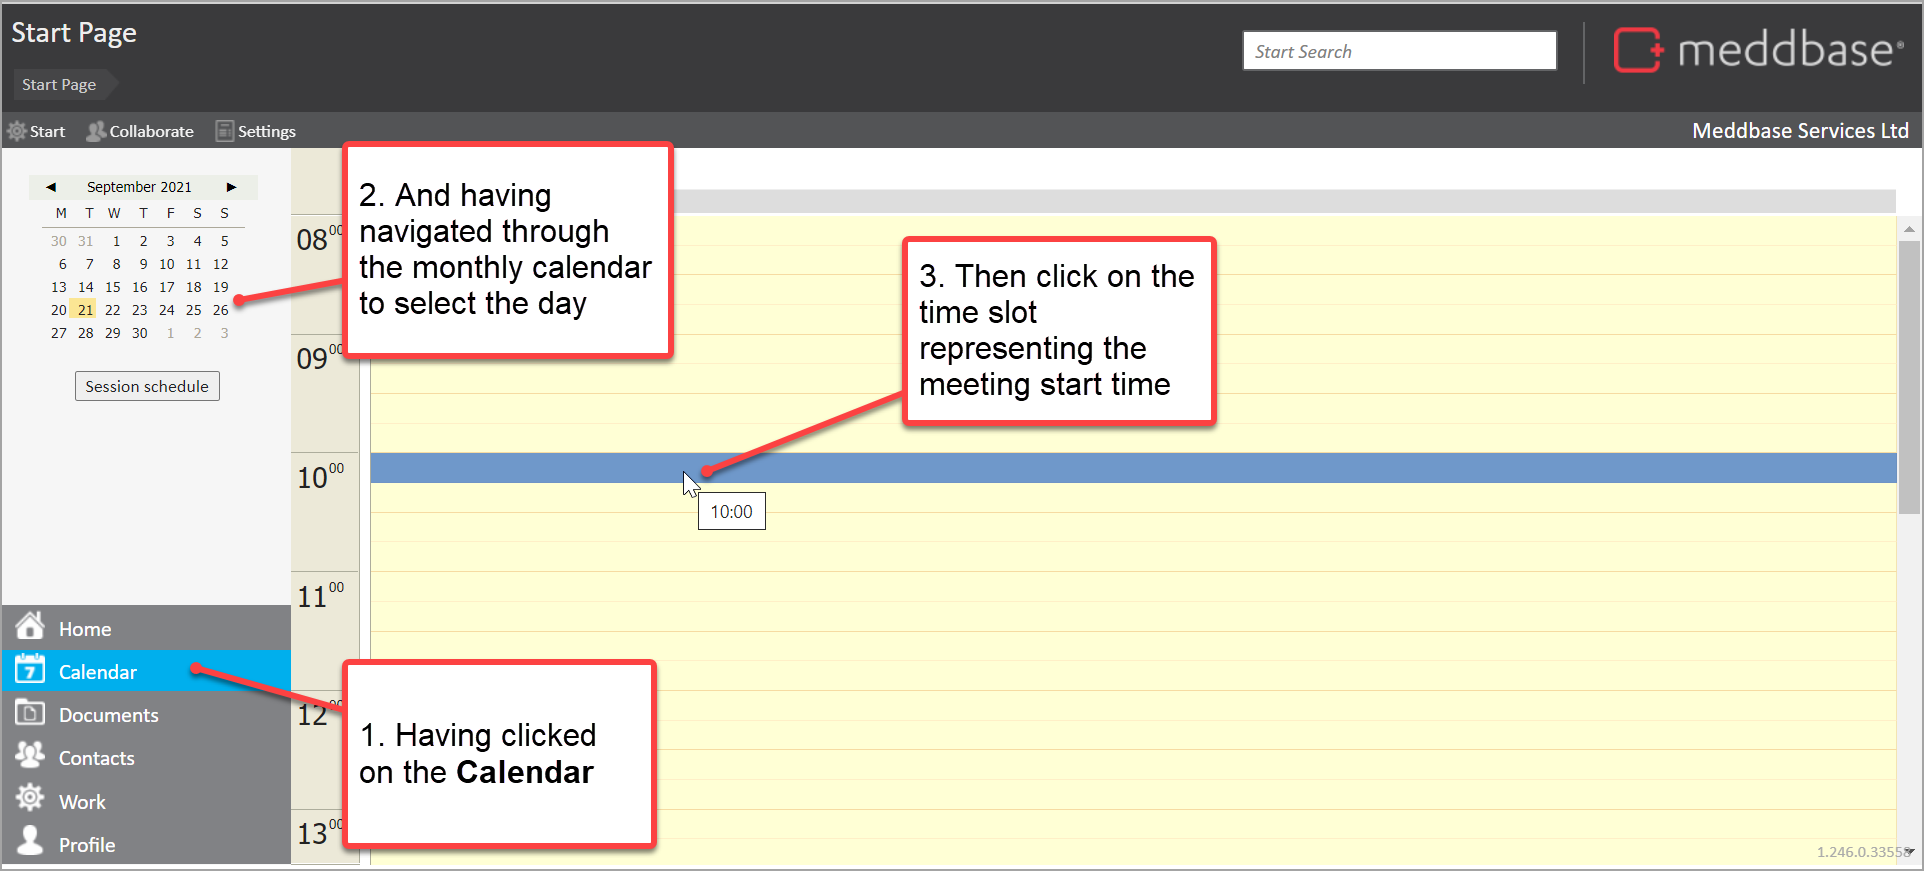 Selecting calendar option - then navigate through calendar and finally select time slot for start